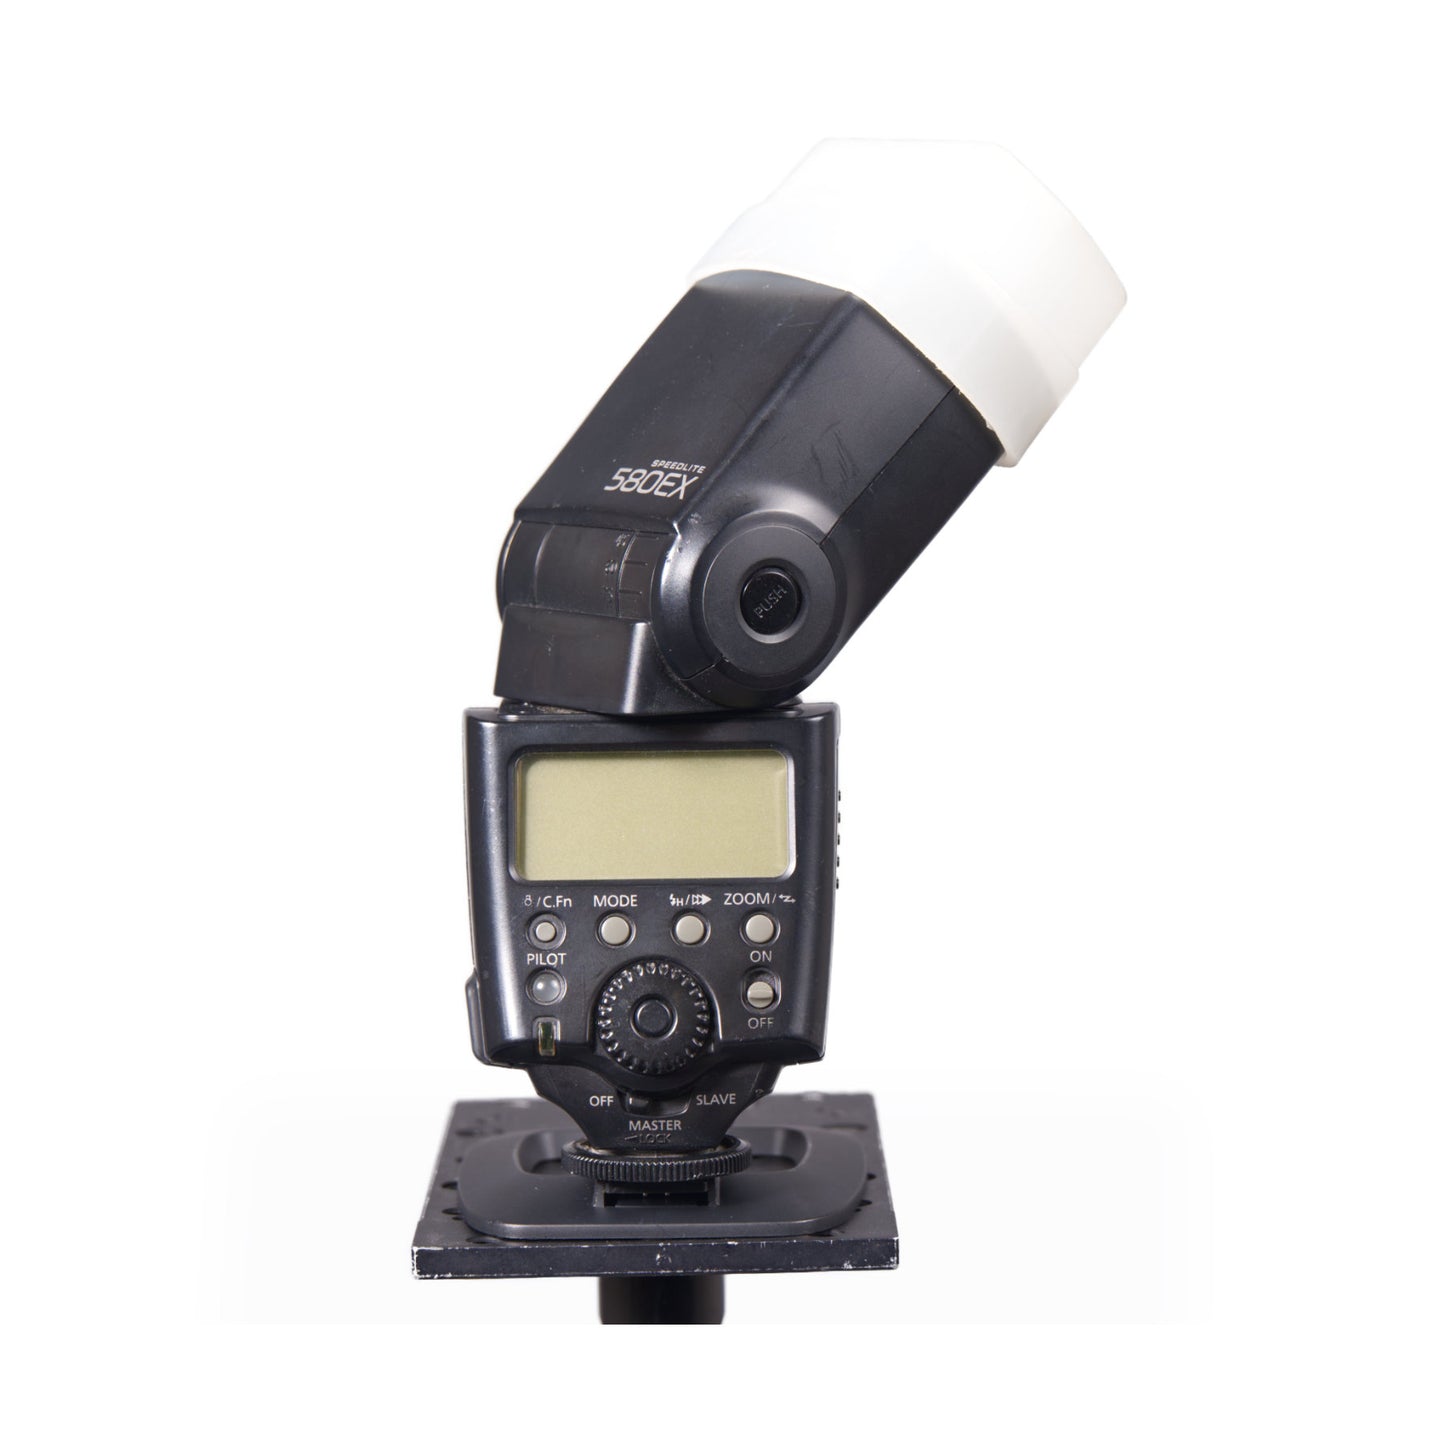 Buy Canon Speedlite 580EX Flash - Second Hand at Topic Store